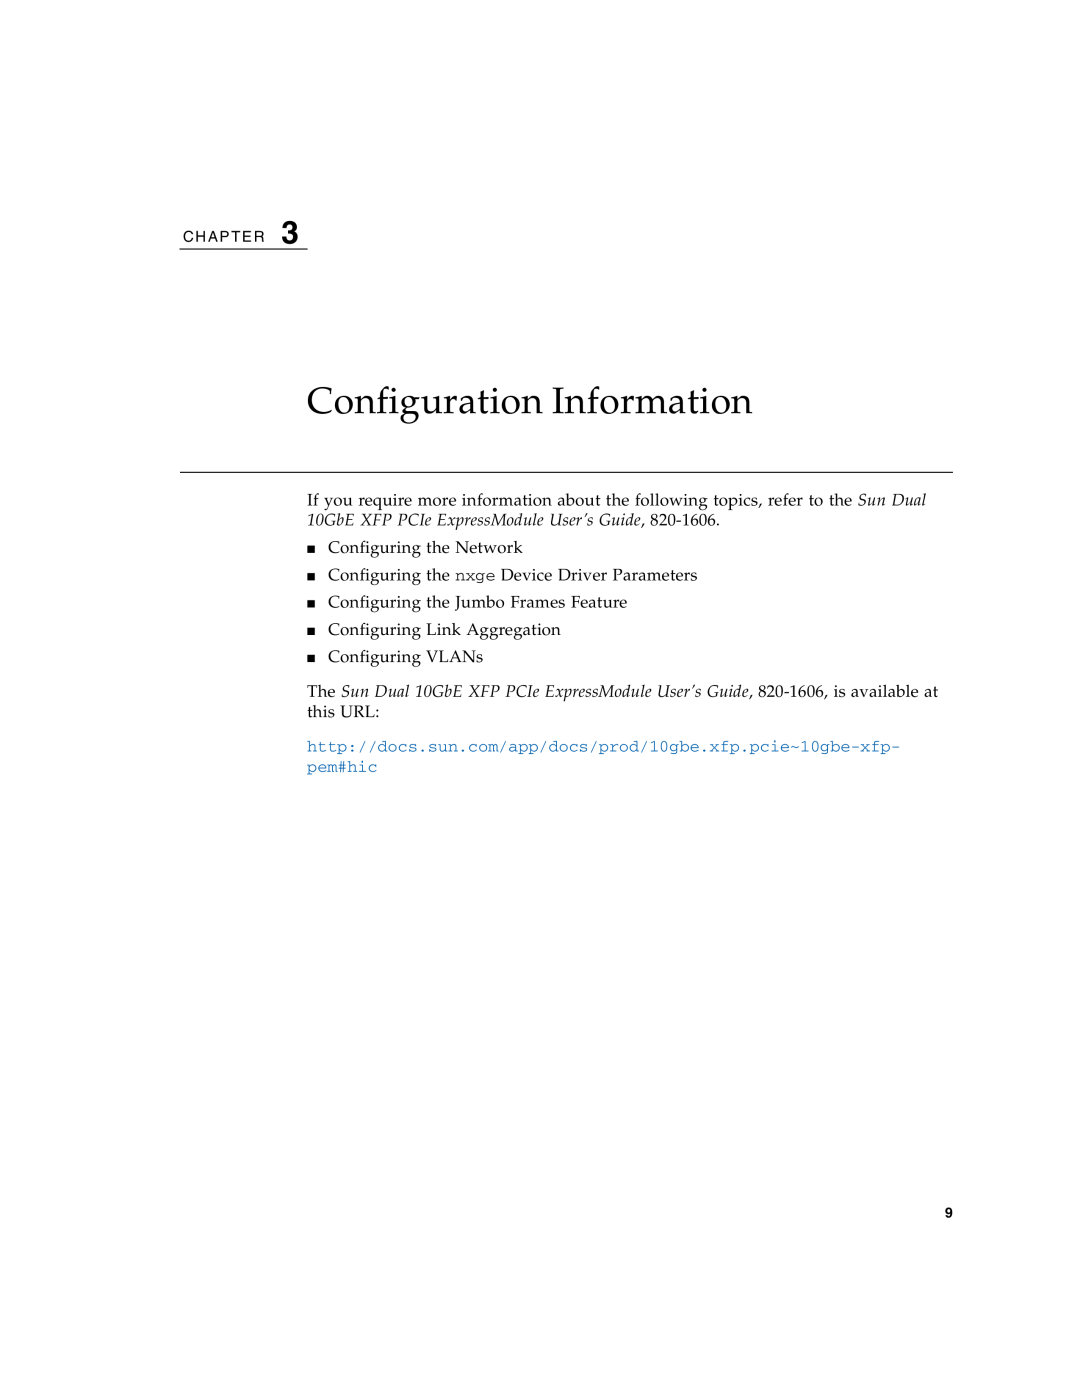 Sun Microsystems T6320 manual Configuration Information 